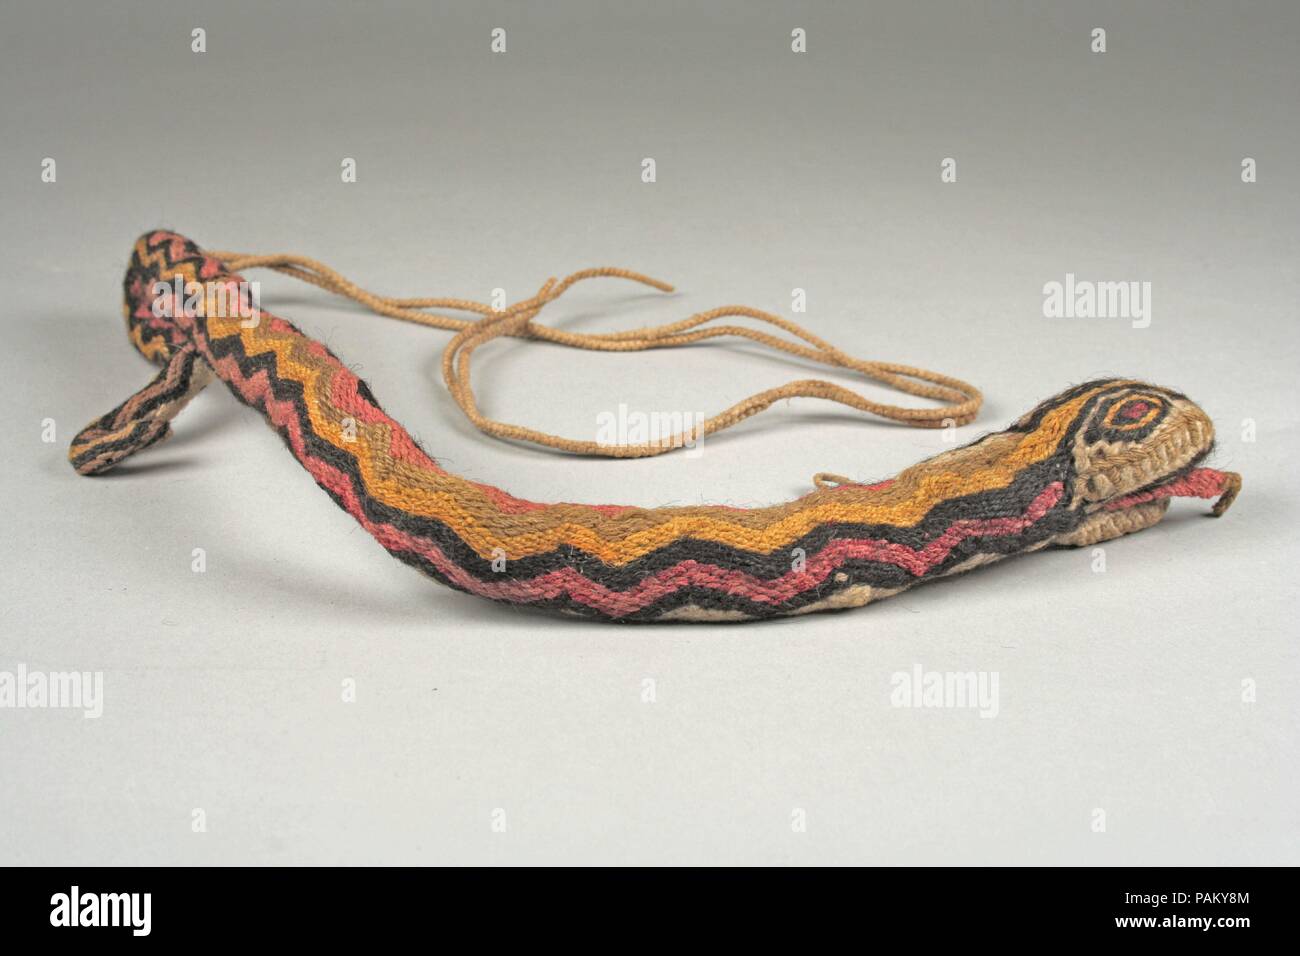 Serpent ornament. Culture: Inca (?). Dimensions: Length (w/tie) 34 in.. Date: A.D. 1450-1532. Museum: Metropolitan Museum of Art, New York, USA. Stock Photo